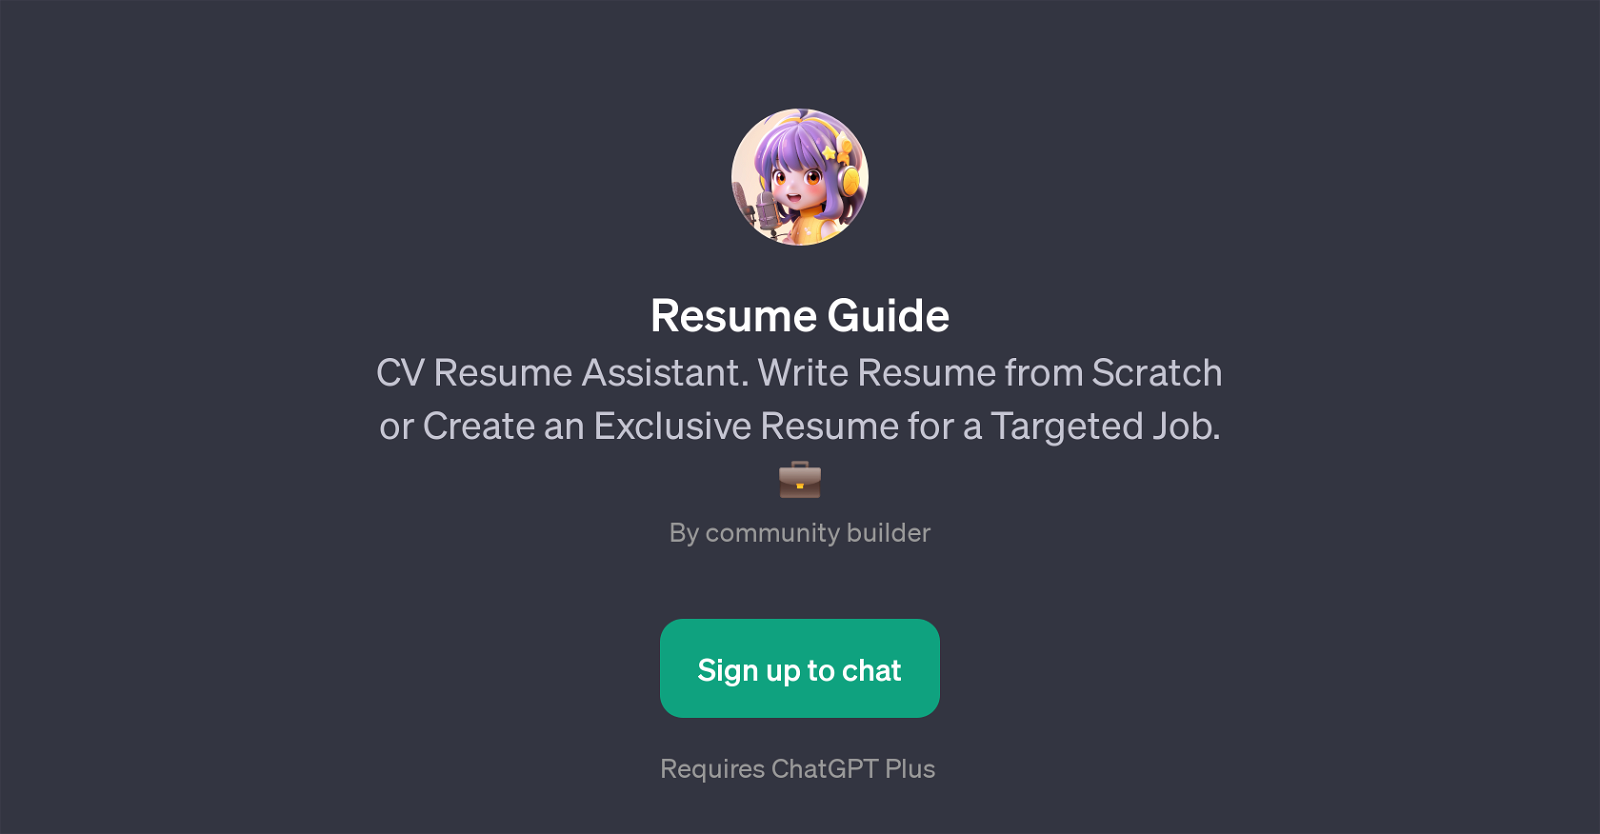 Resume Guide website